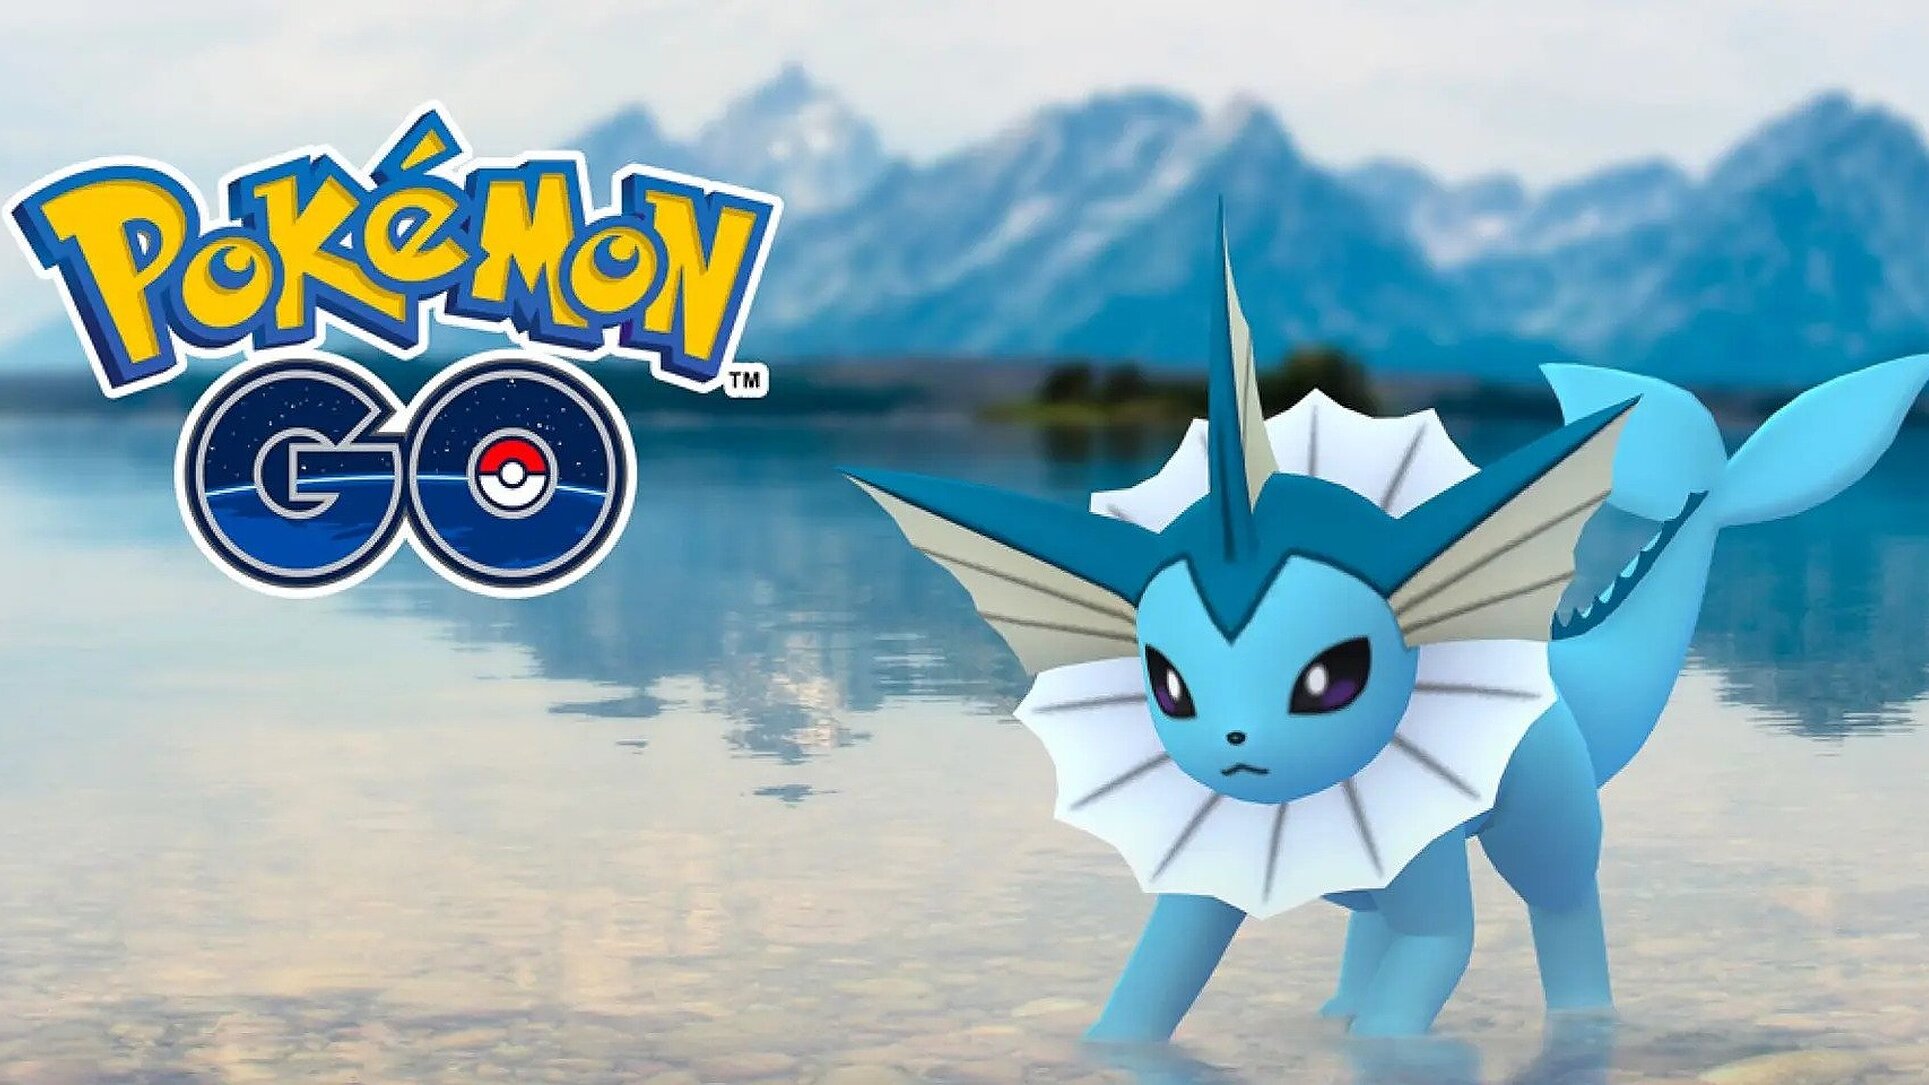 Vaporeon is one of the best Water-type Pokémon in Pokémon Go.